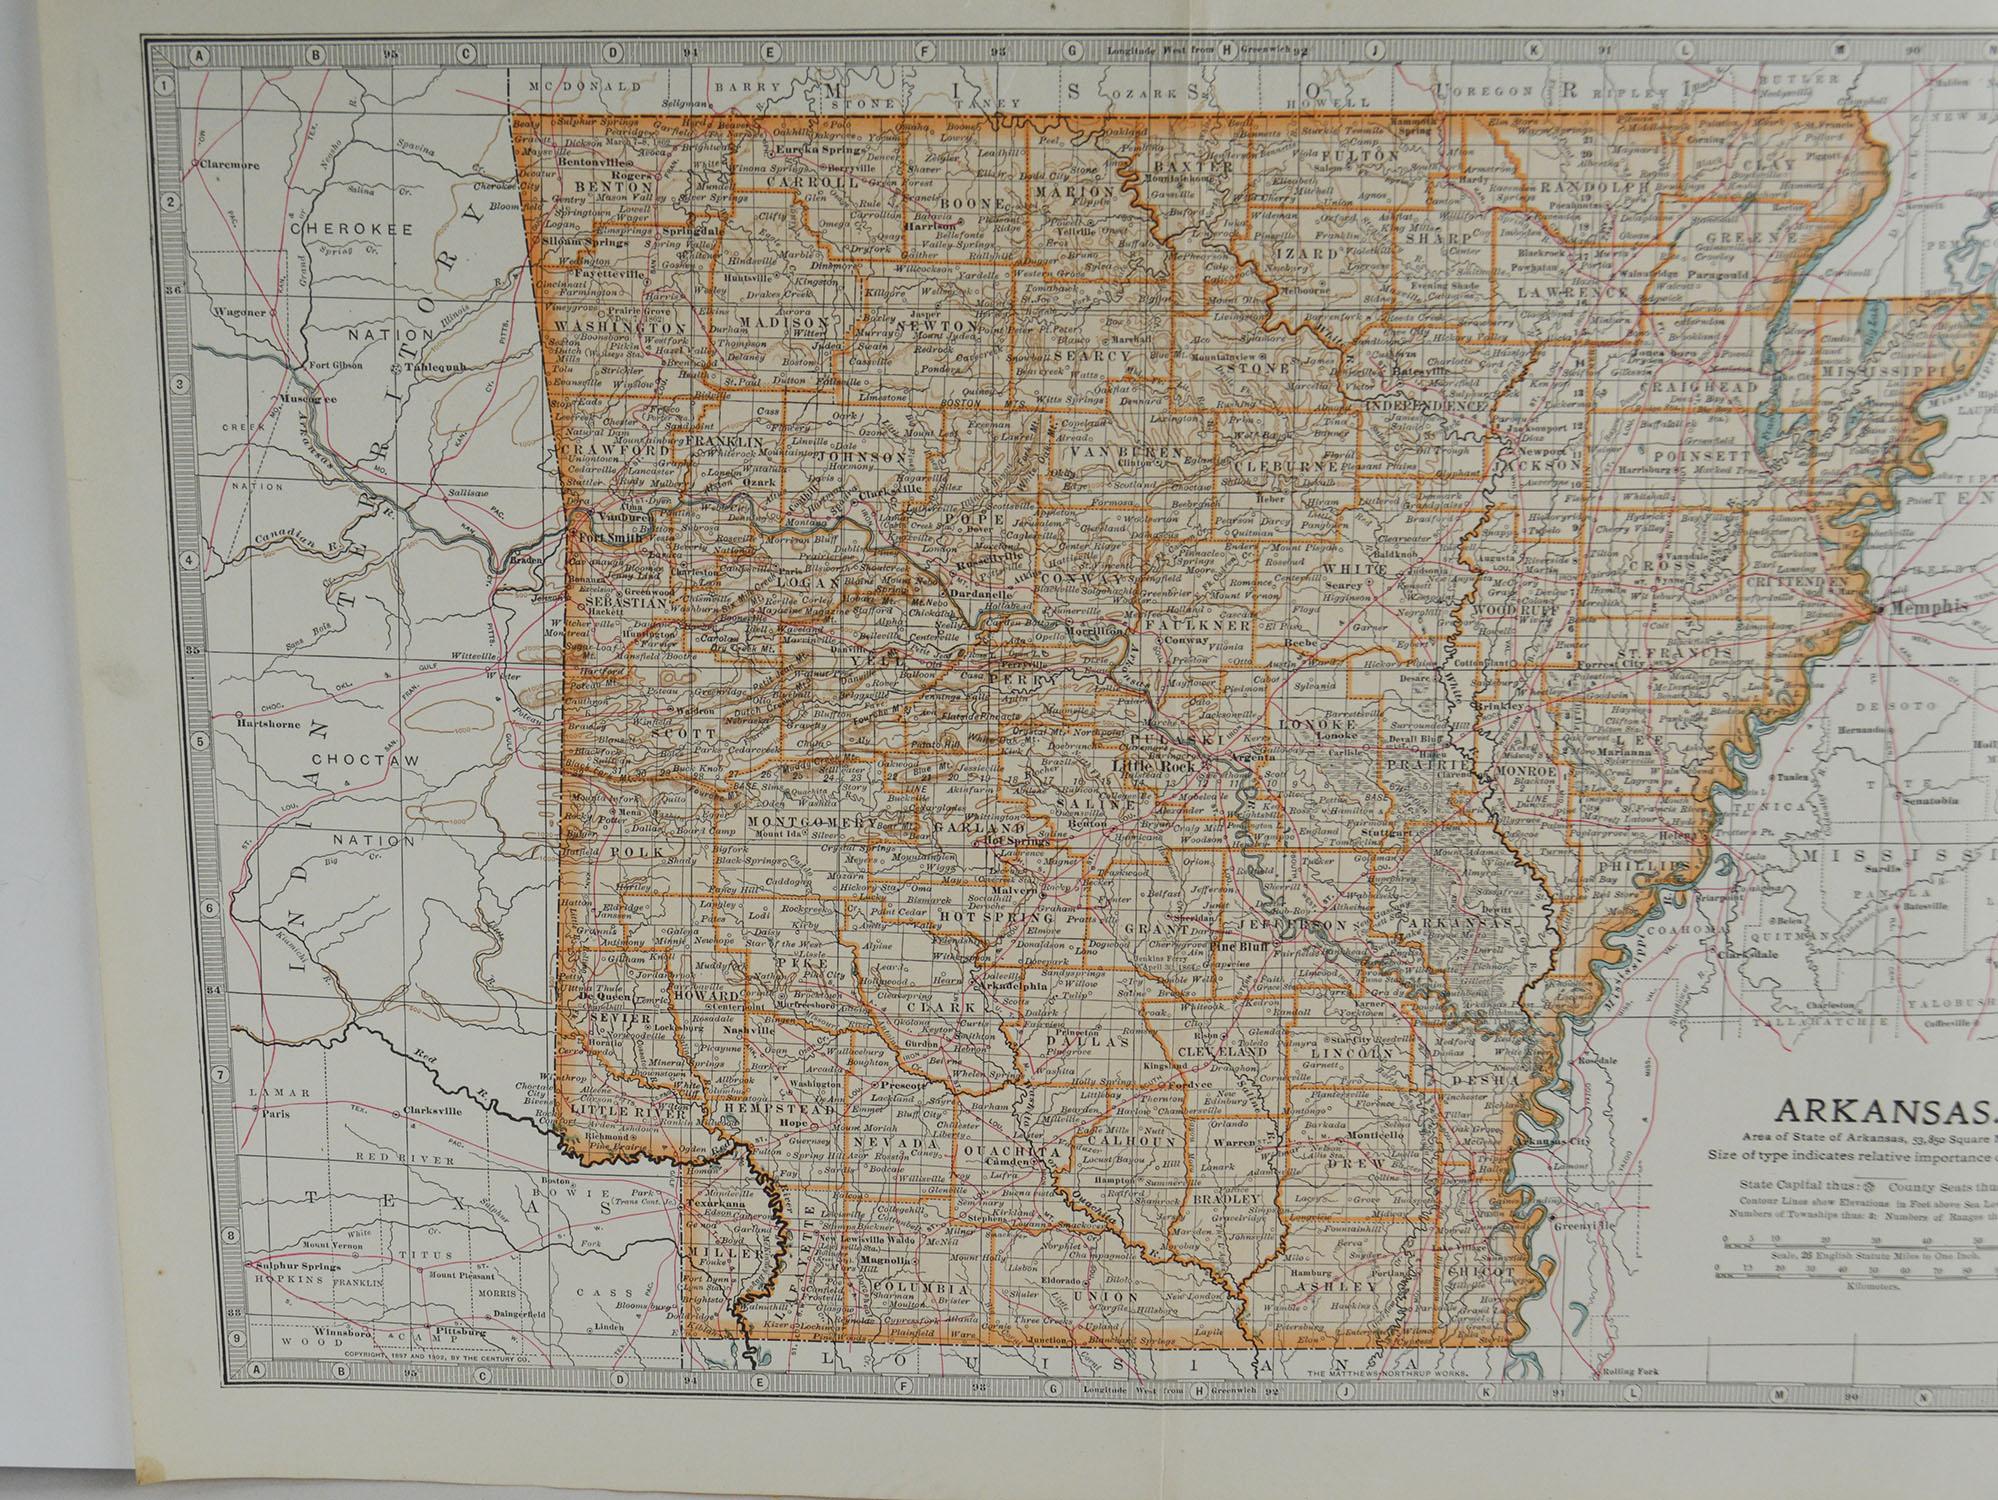 English Original Antique Map of Arkansas, circa 1890